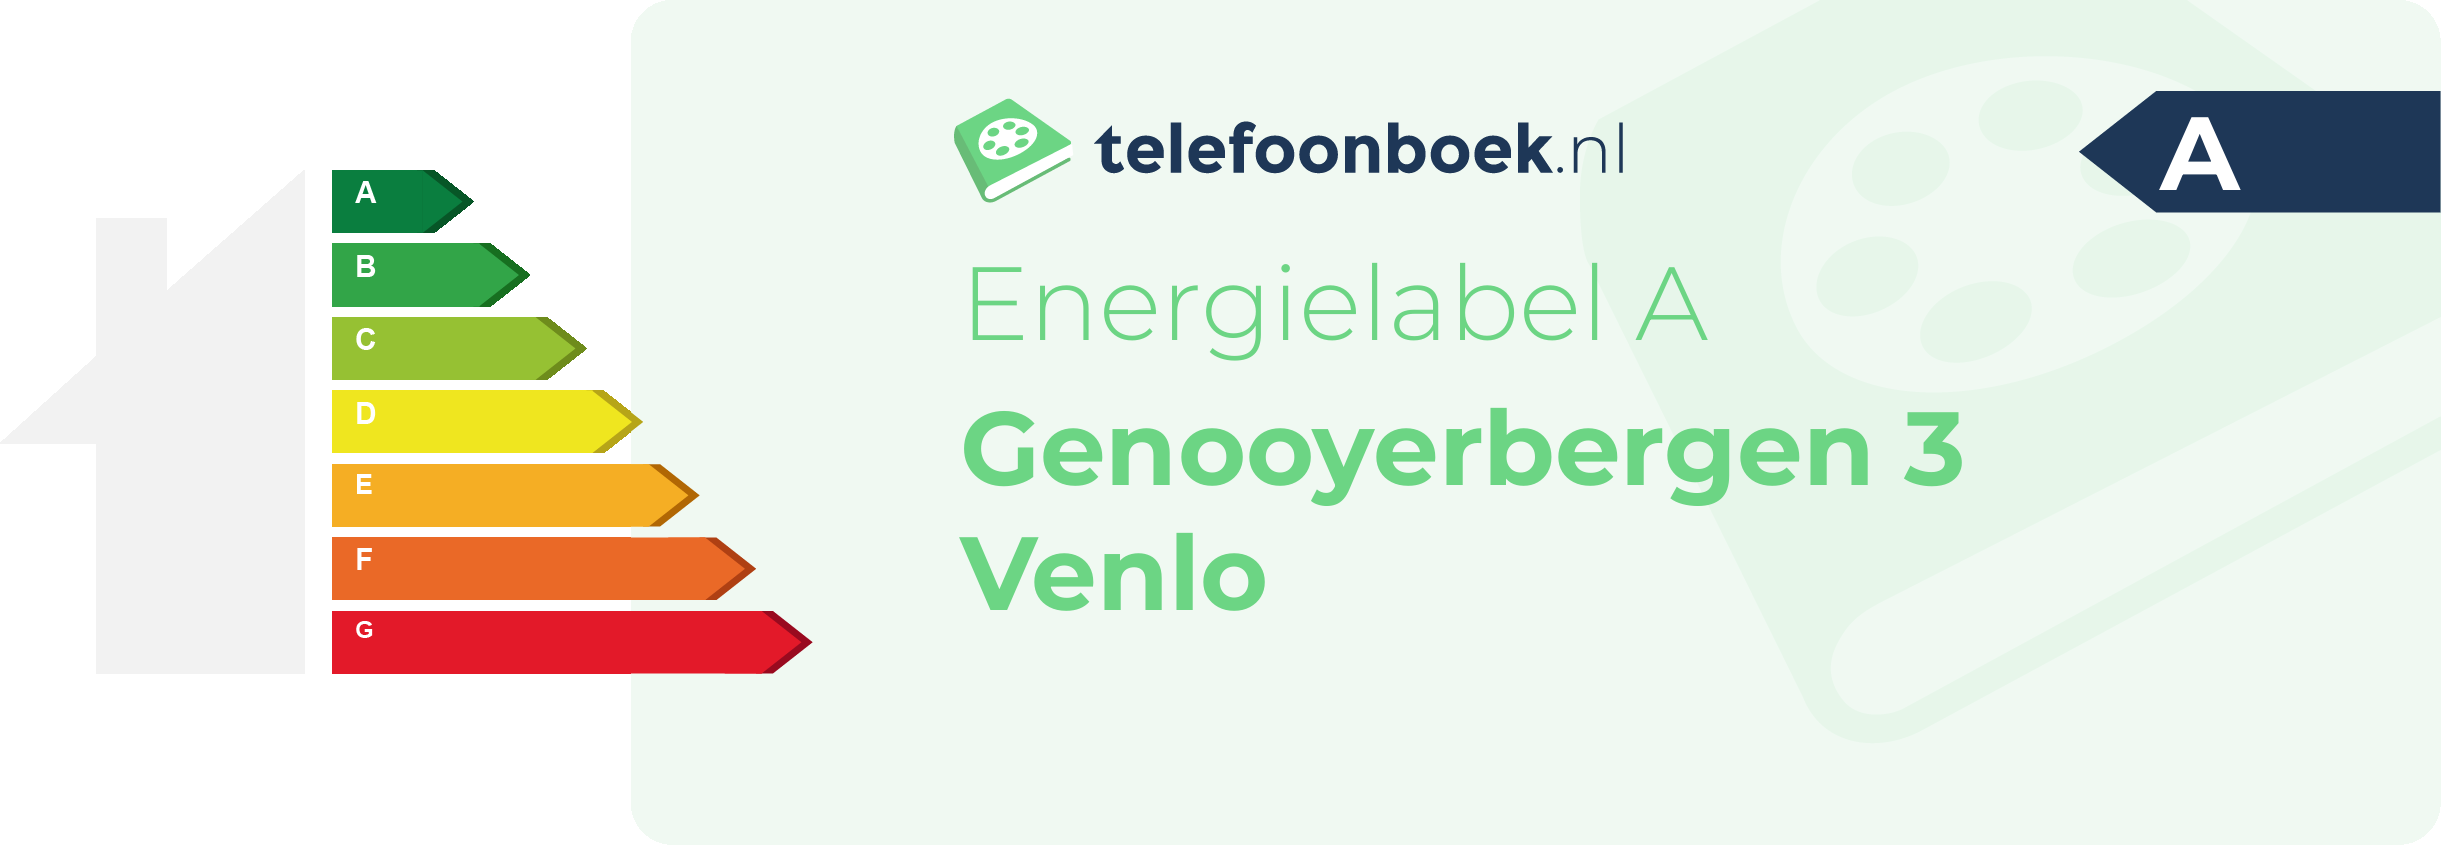 Energielabel Genooyerbergen 3 Venlo